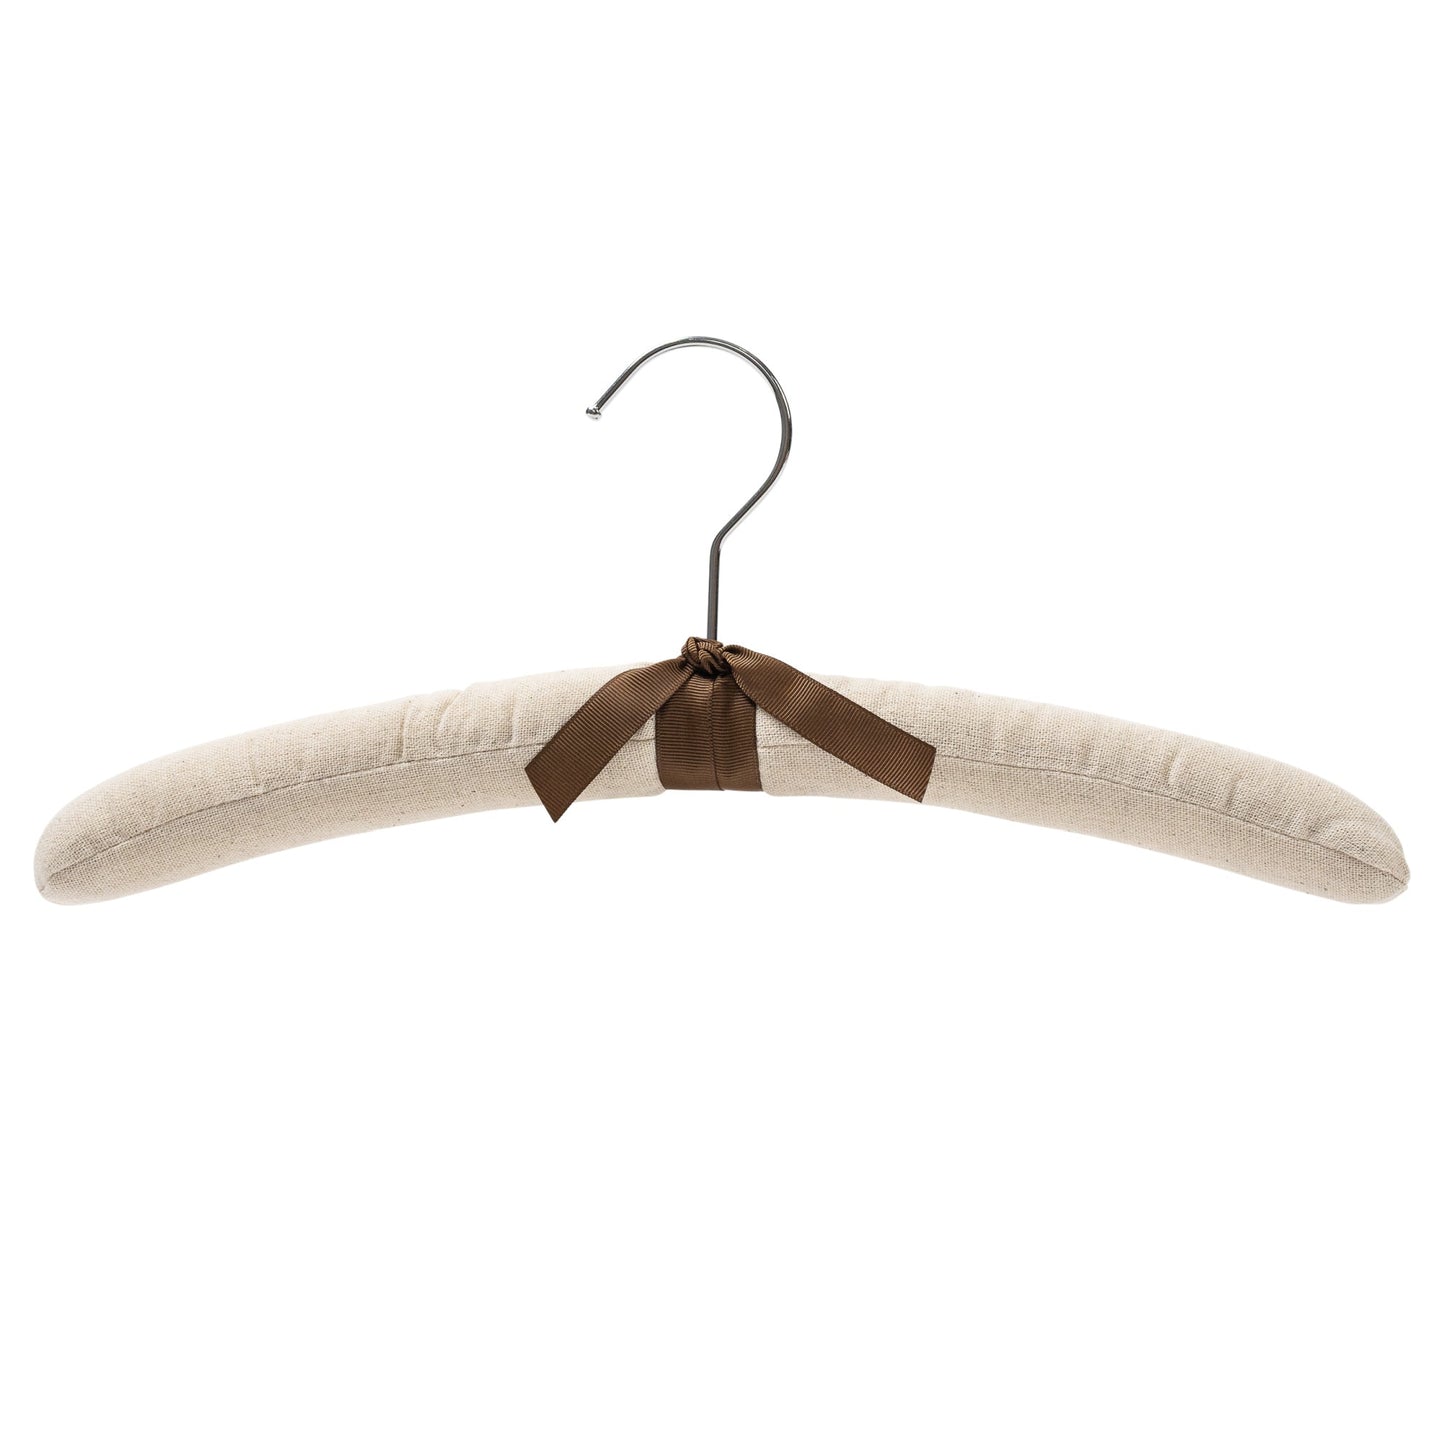 38cm Linen Padded Coat Hanger with Chrome Hook-Sold in Bundle of 10/25/50 - Rackshop Australia